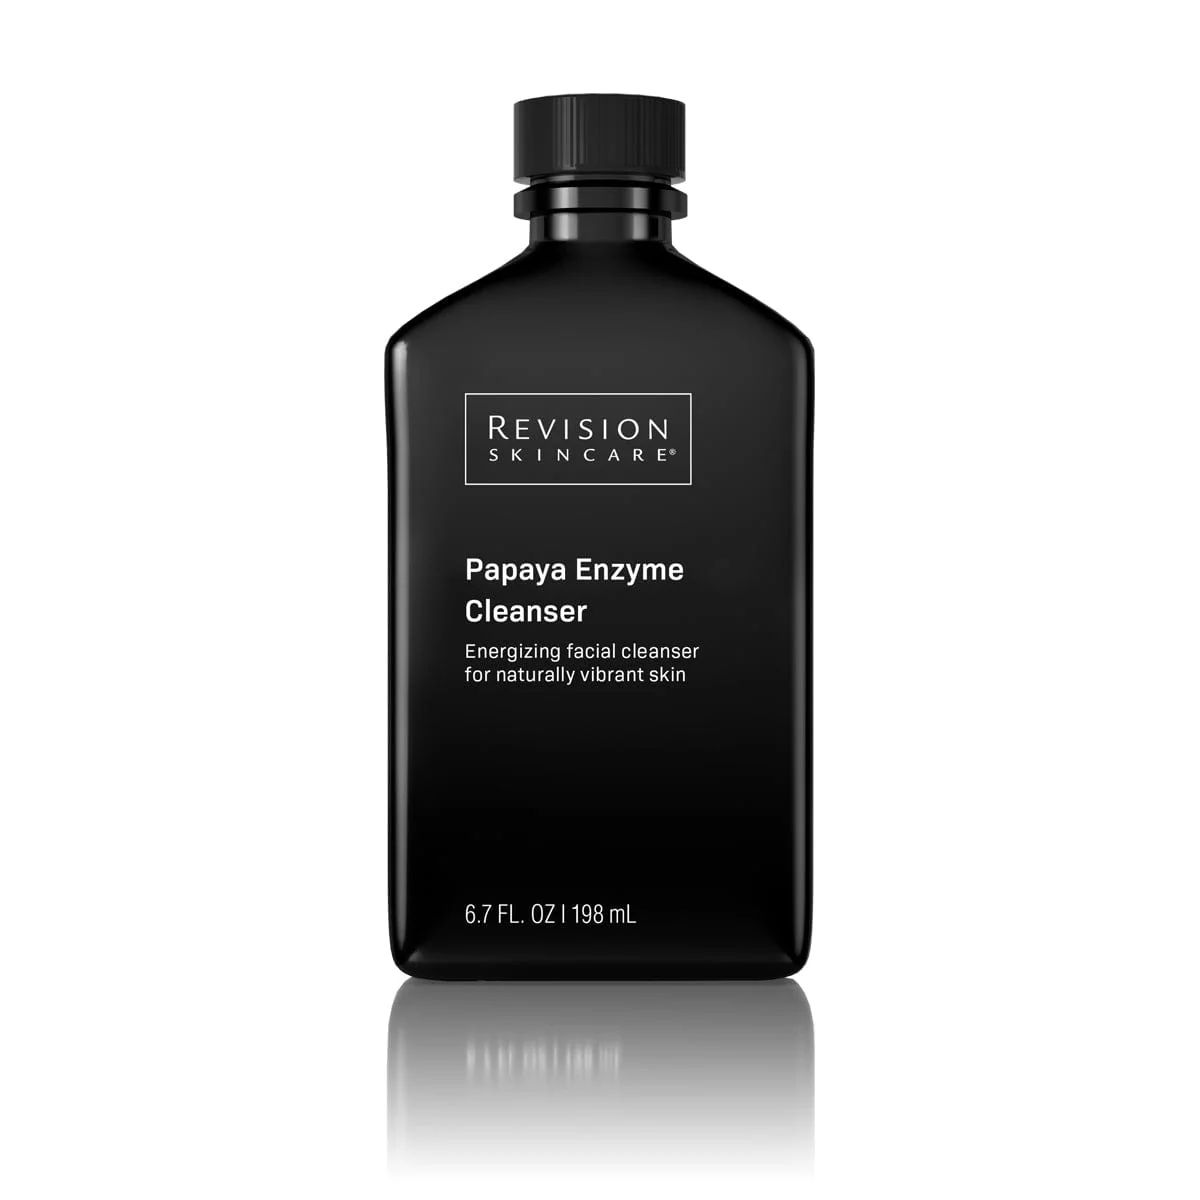 Papaya Enzyme Cleanser 6.7 fl oz | Revision skincare